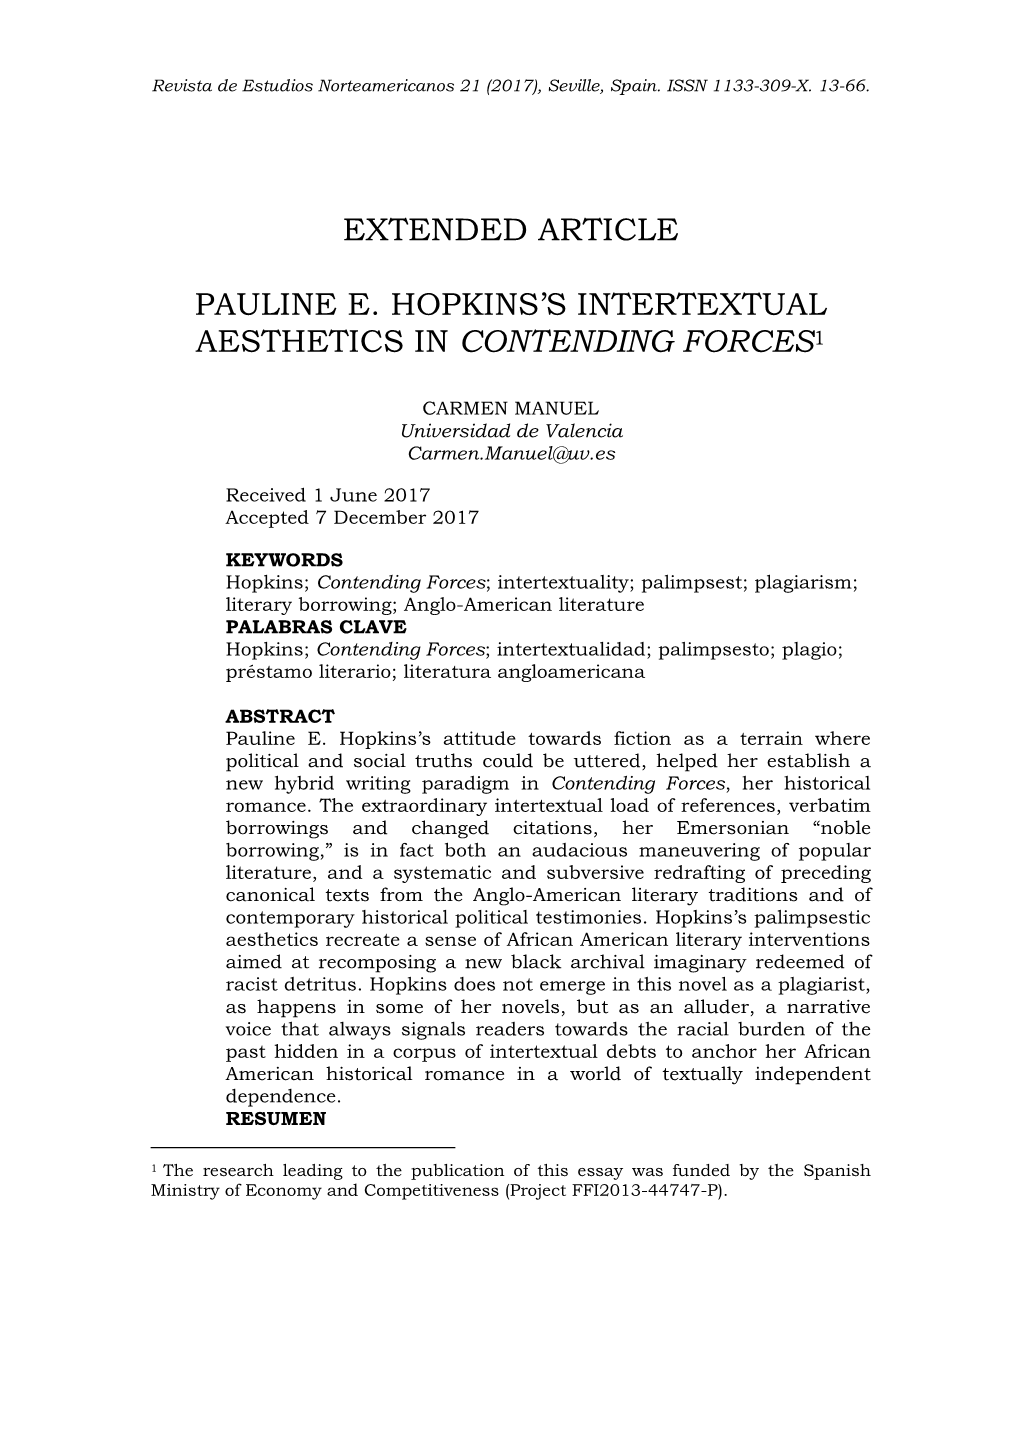 Extended Article Pauline E. Hopkins's Intertextual Aesthetics in Contending